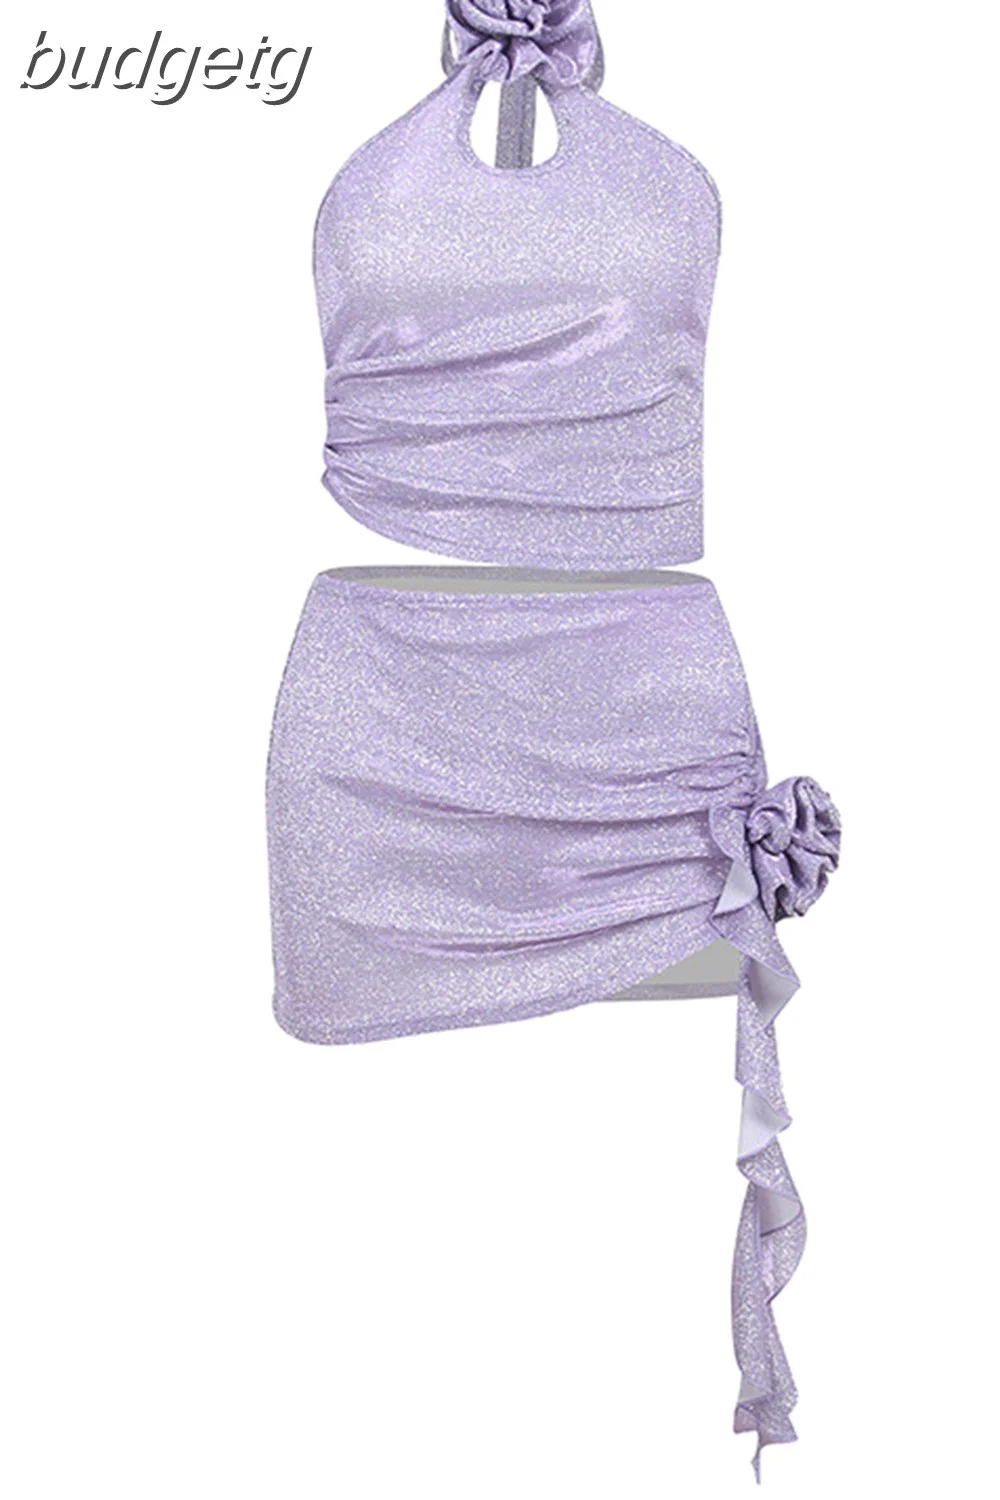 budgetg Piece Set Women Flower Trim Glitter Outfits Sexy Slant Shoulder Corset Crop Top+High Waist Ruched Mini Skirts 2023 Summer